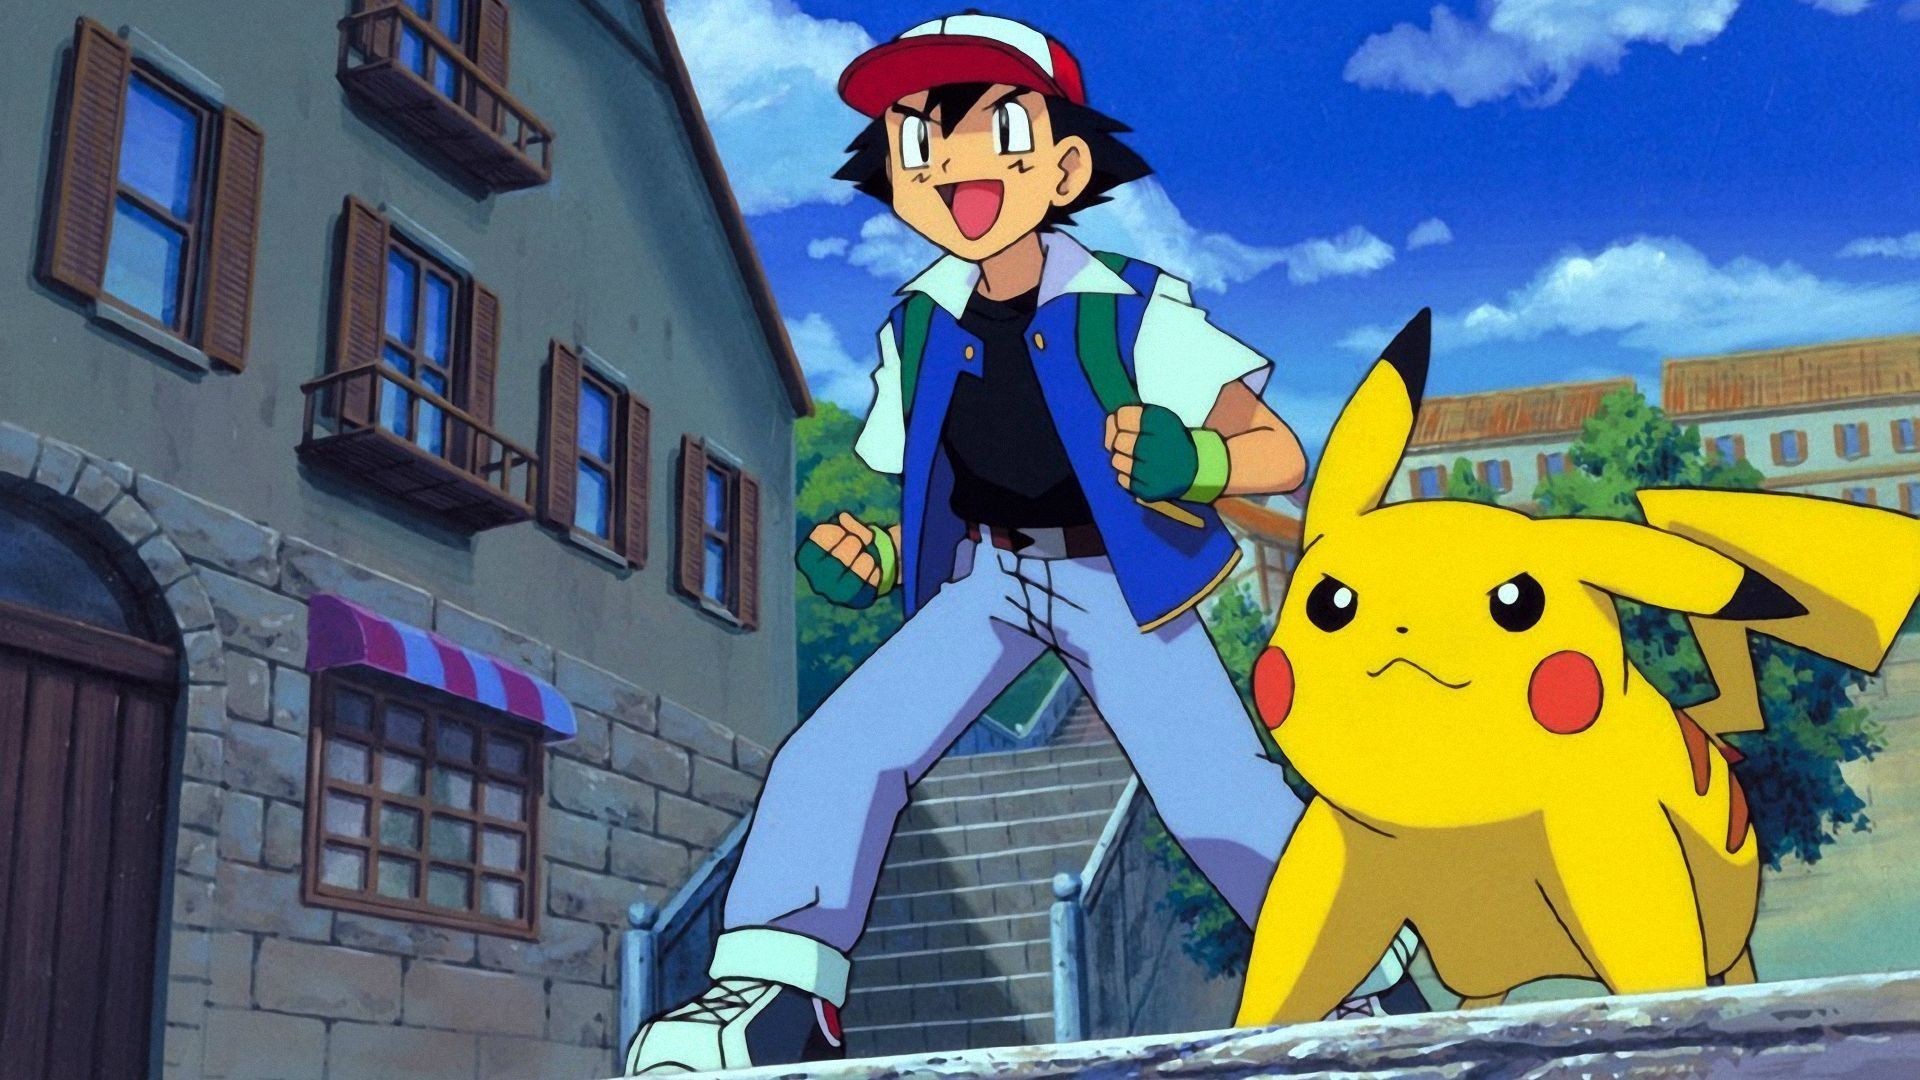 pikachu, anime, pokemon 4ever: celebi voice of the forest, ash ketchum, pokémon